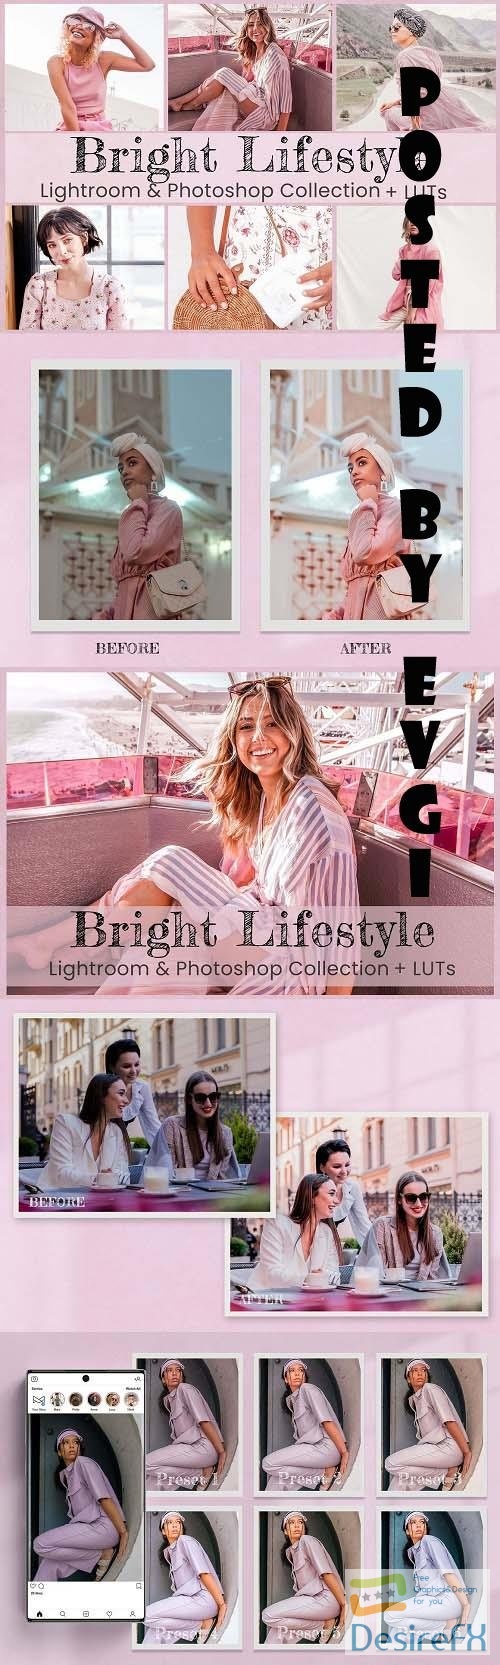 Bright Lifestyle Lightroom Photoshop - 6545738